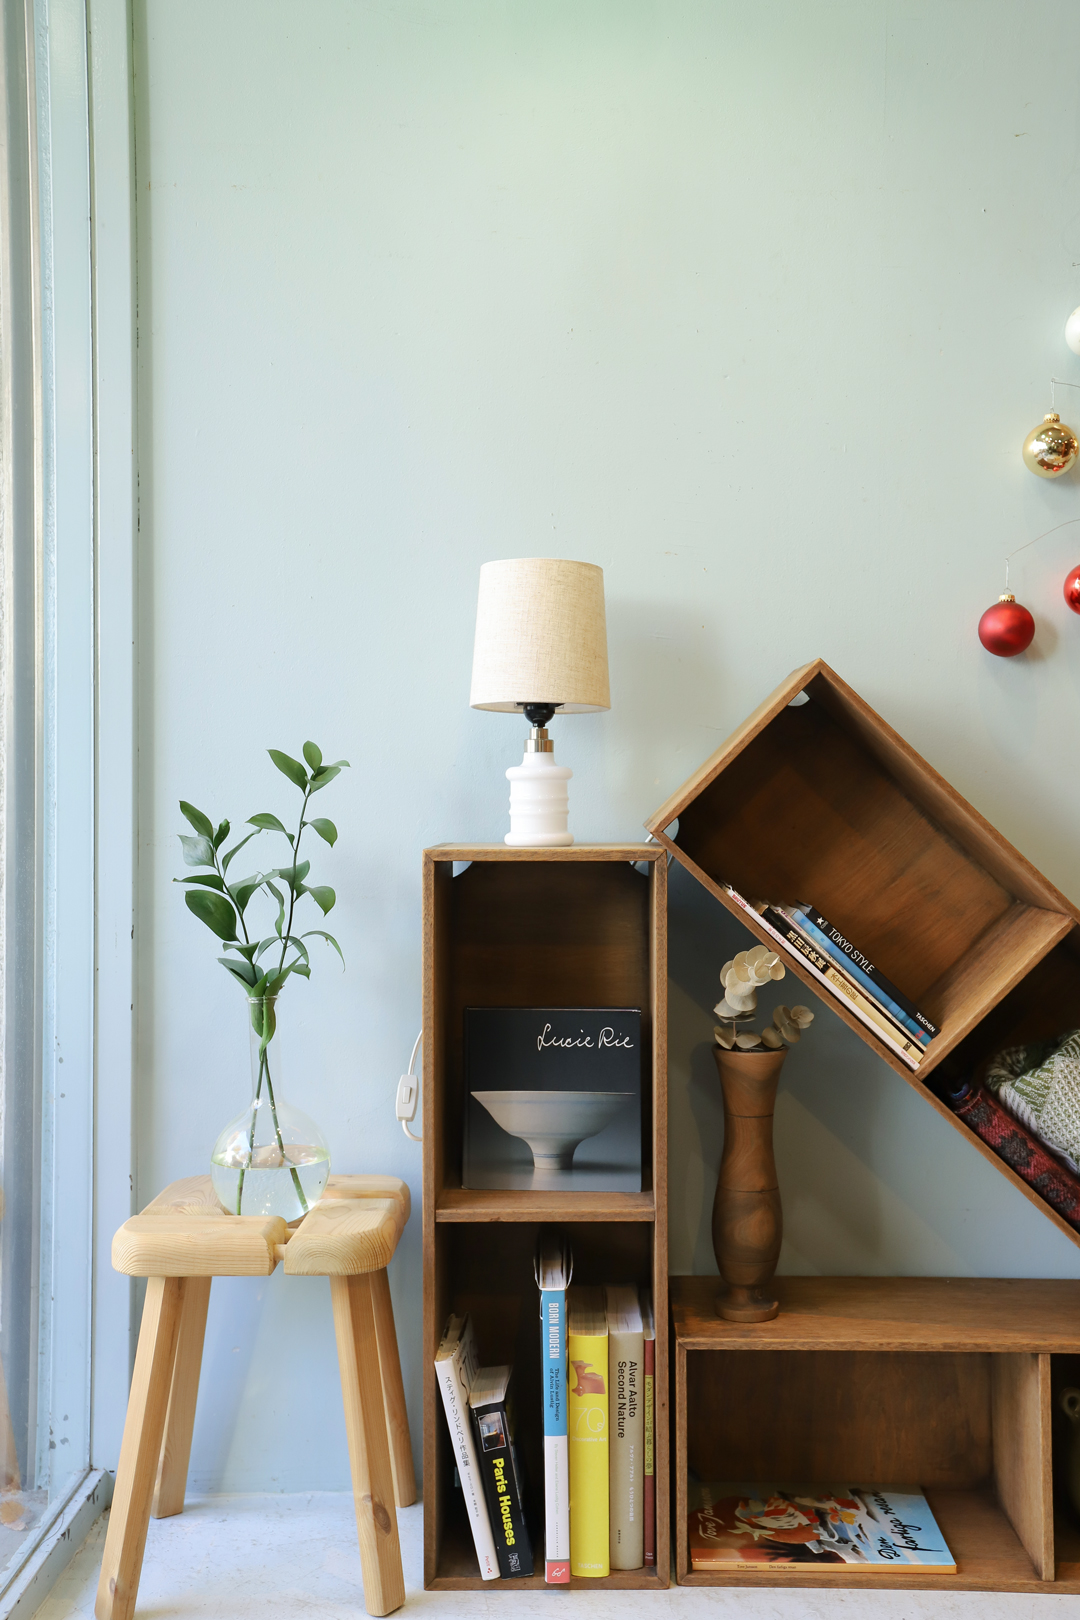 Holmegaard Table Lamp “Apoteker” Sidse Werner/ホルムガード テーブルランプ シセ・ヴェアナー ガラス 照明 北欧デザイン